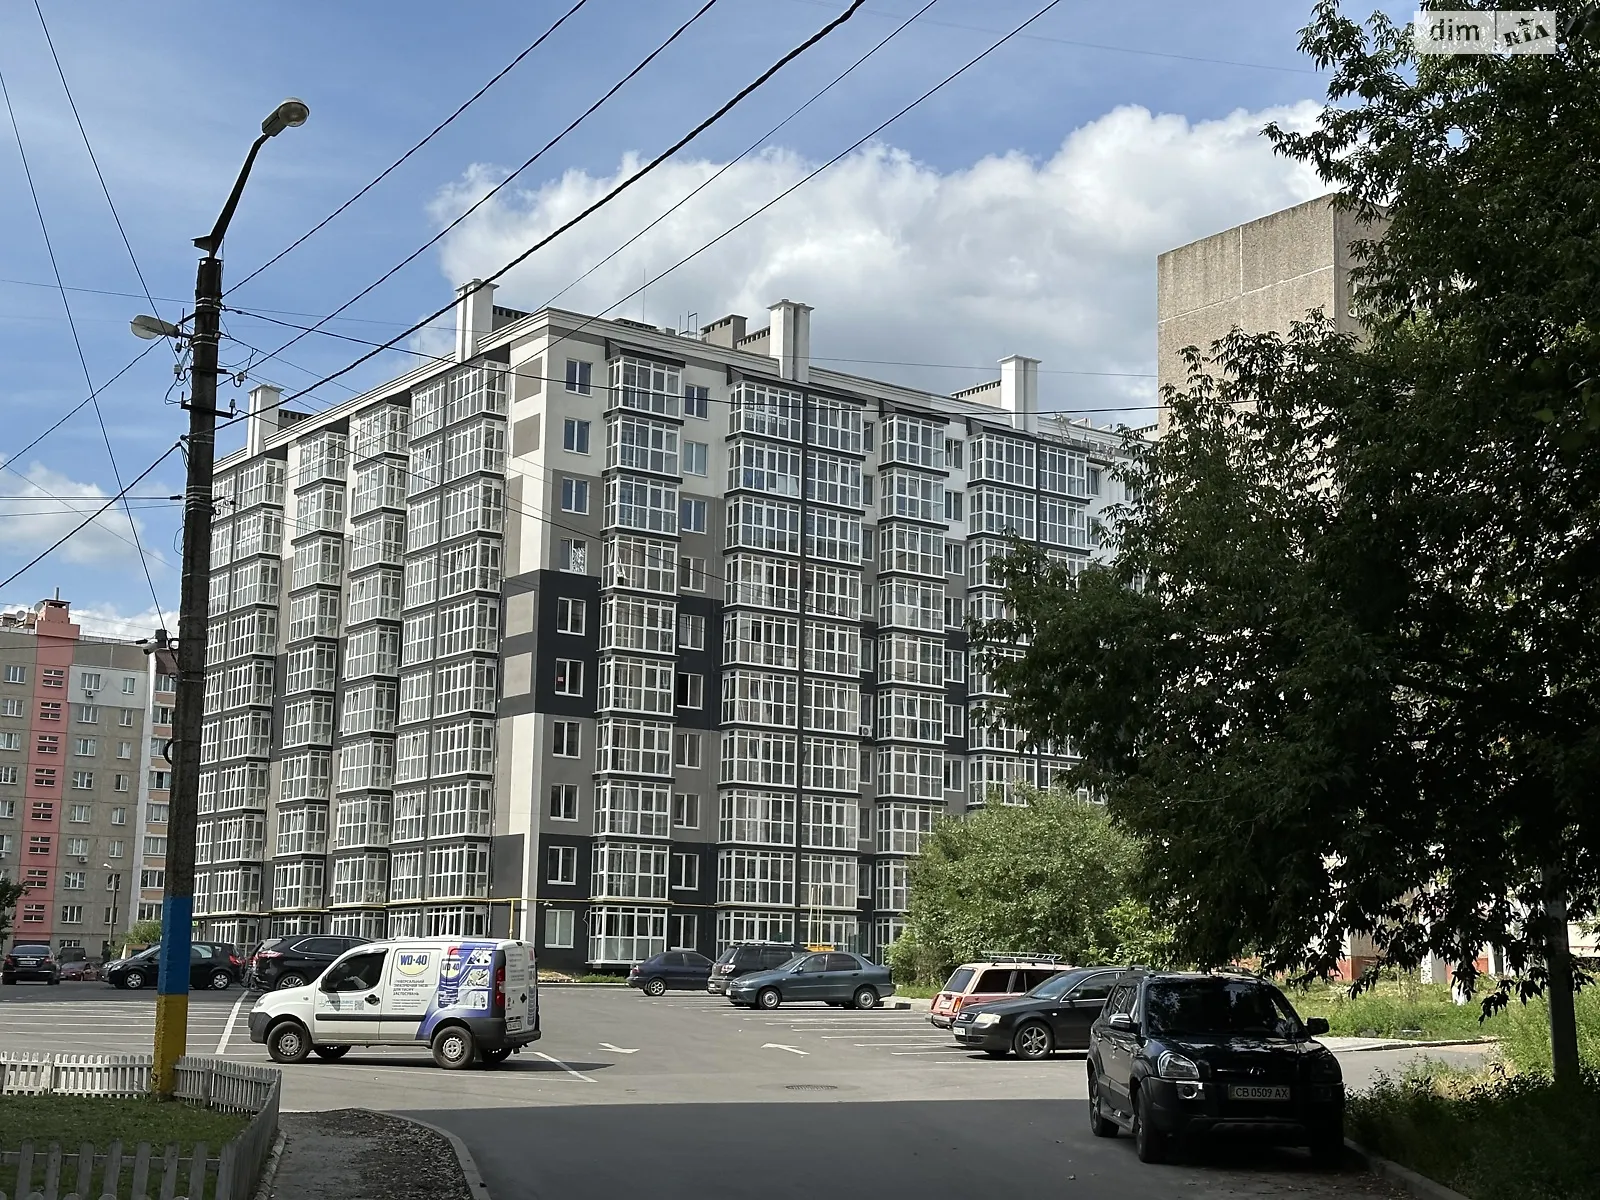 Продается 2-комнатная квартира 65 кв. м в Чернигове - фото 3